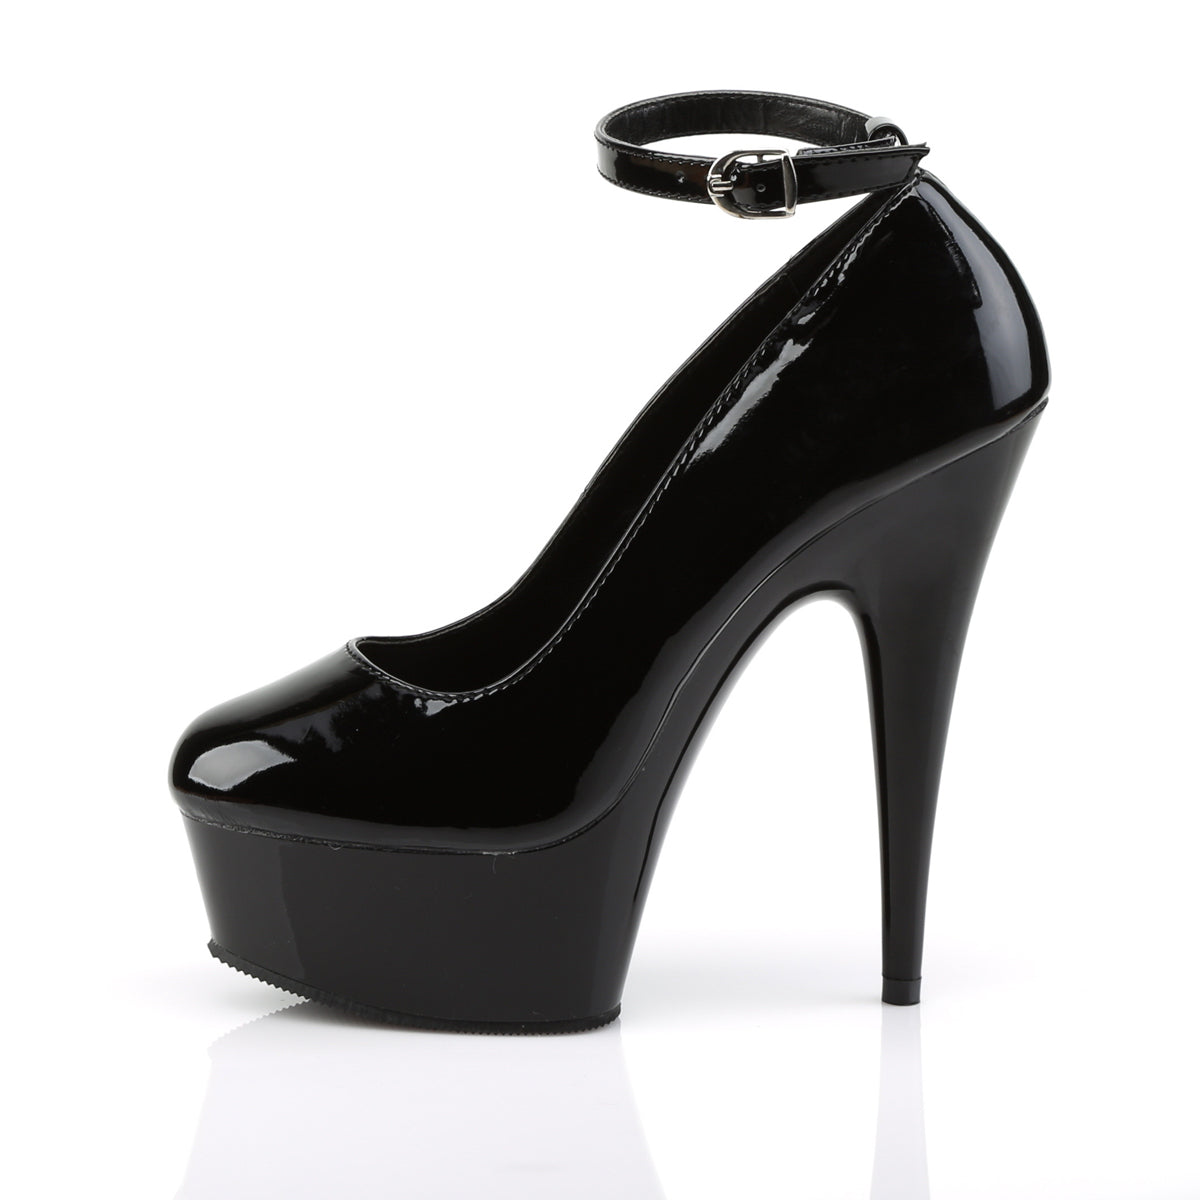 DELIGHT-686 6" Heel Black Patent Pole Dancing Platforms-Pleaser- Sexy Shoes Pole Dance Heels